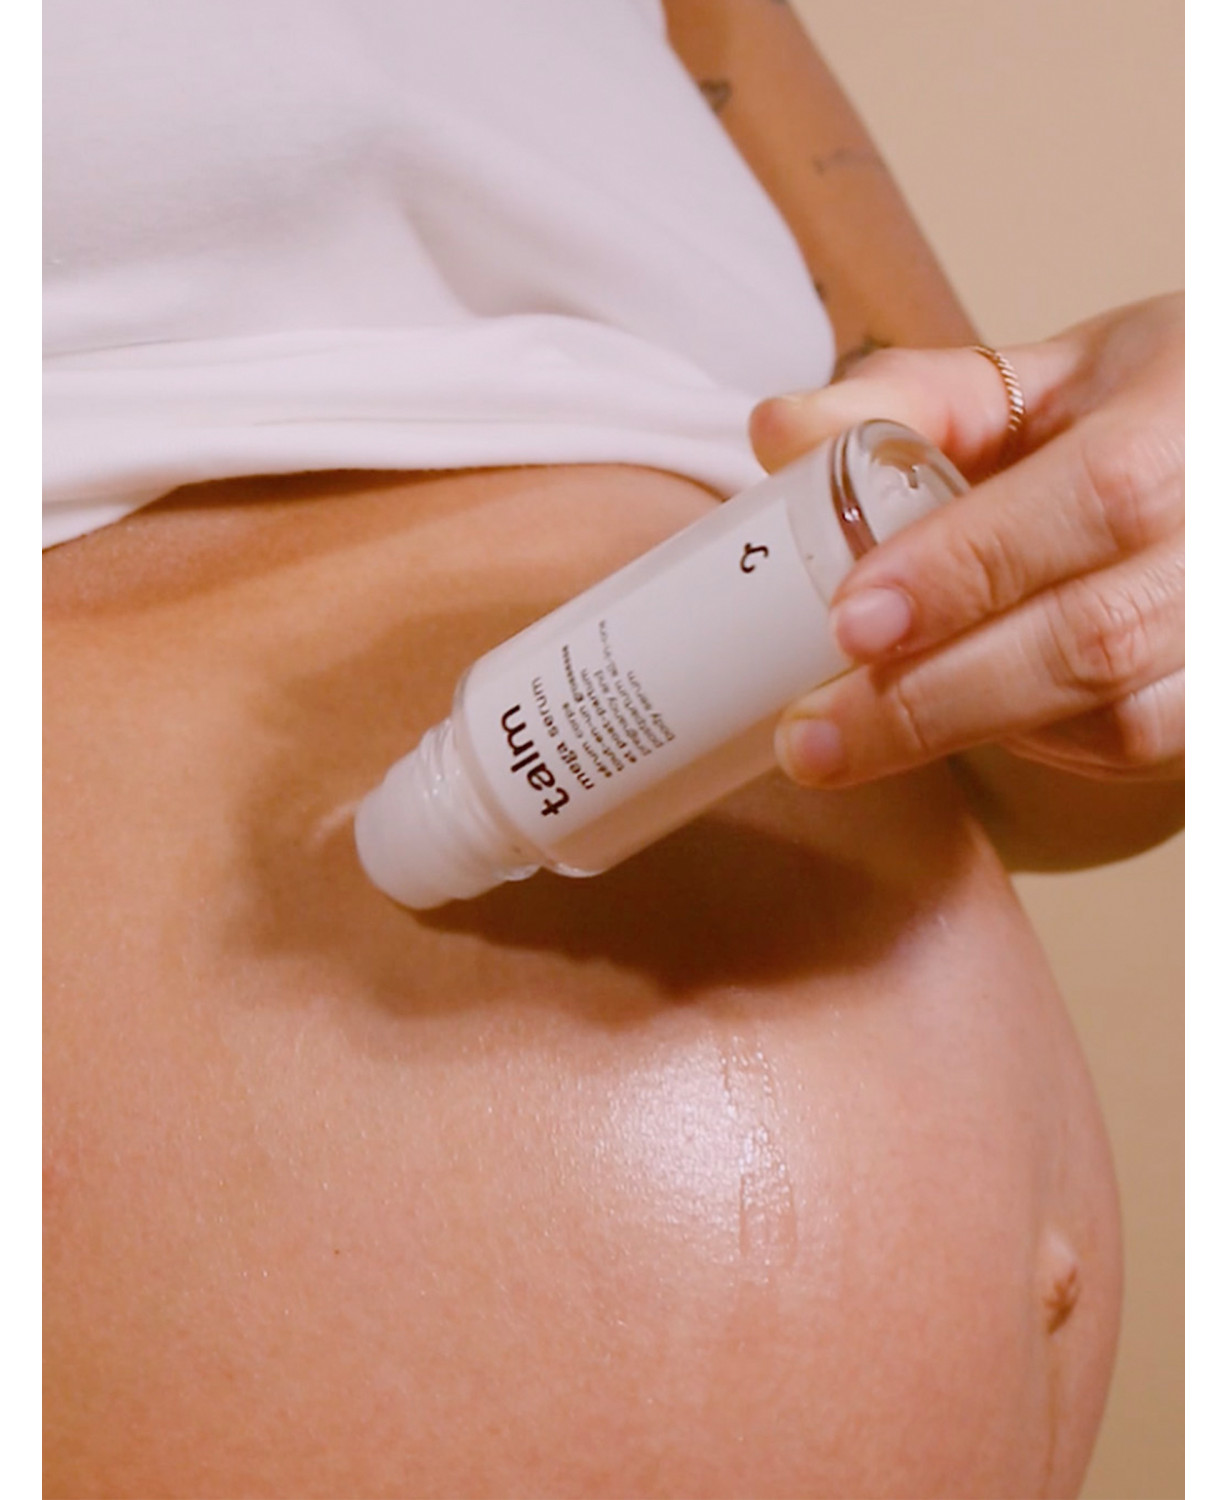 Talm organic pregnancy and postpartum care serum